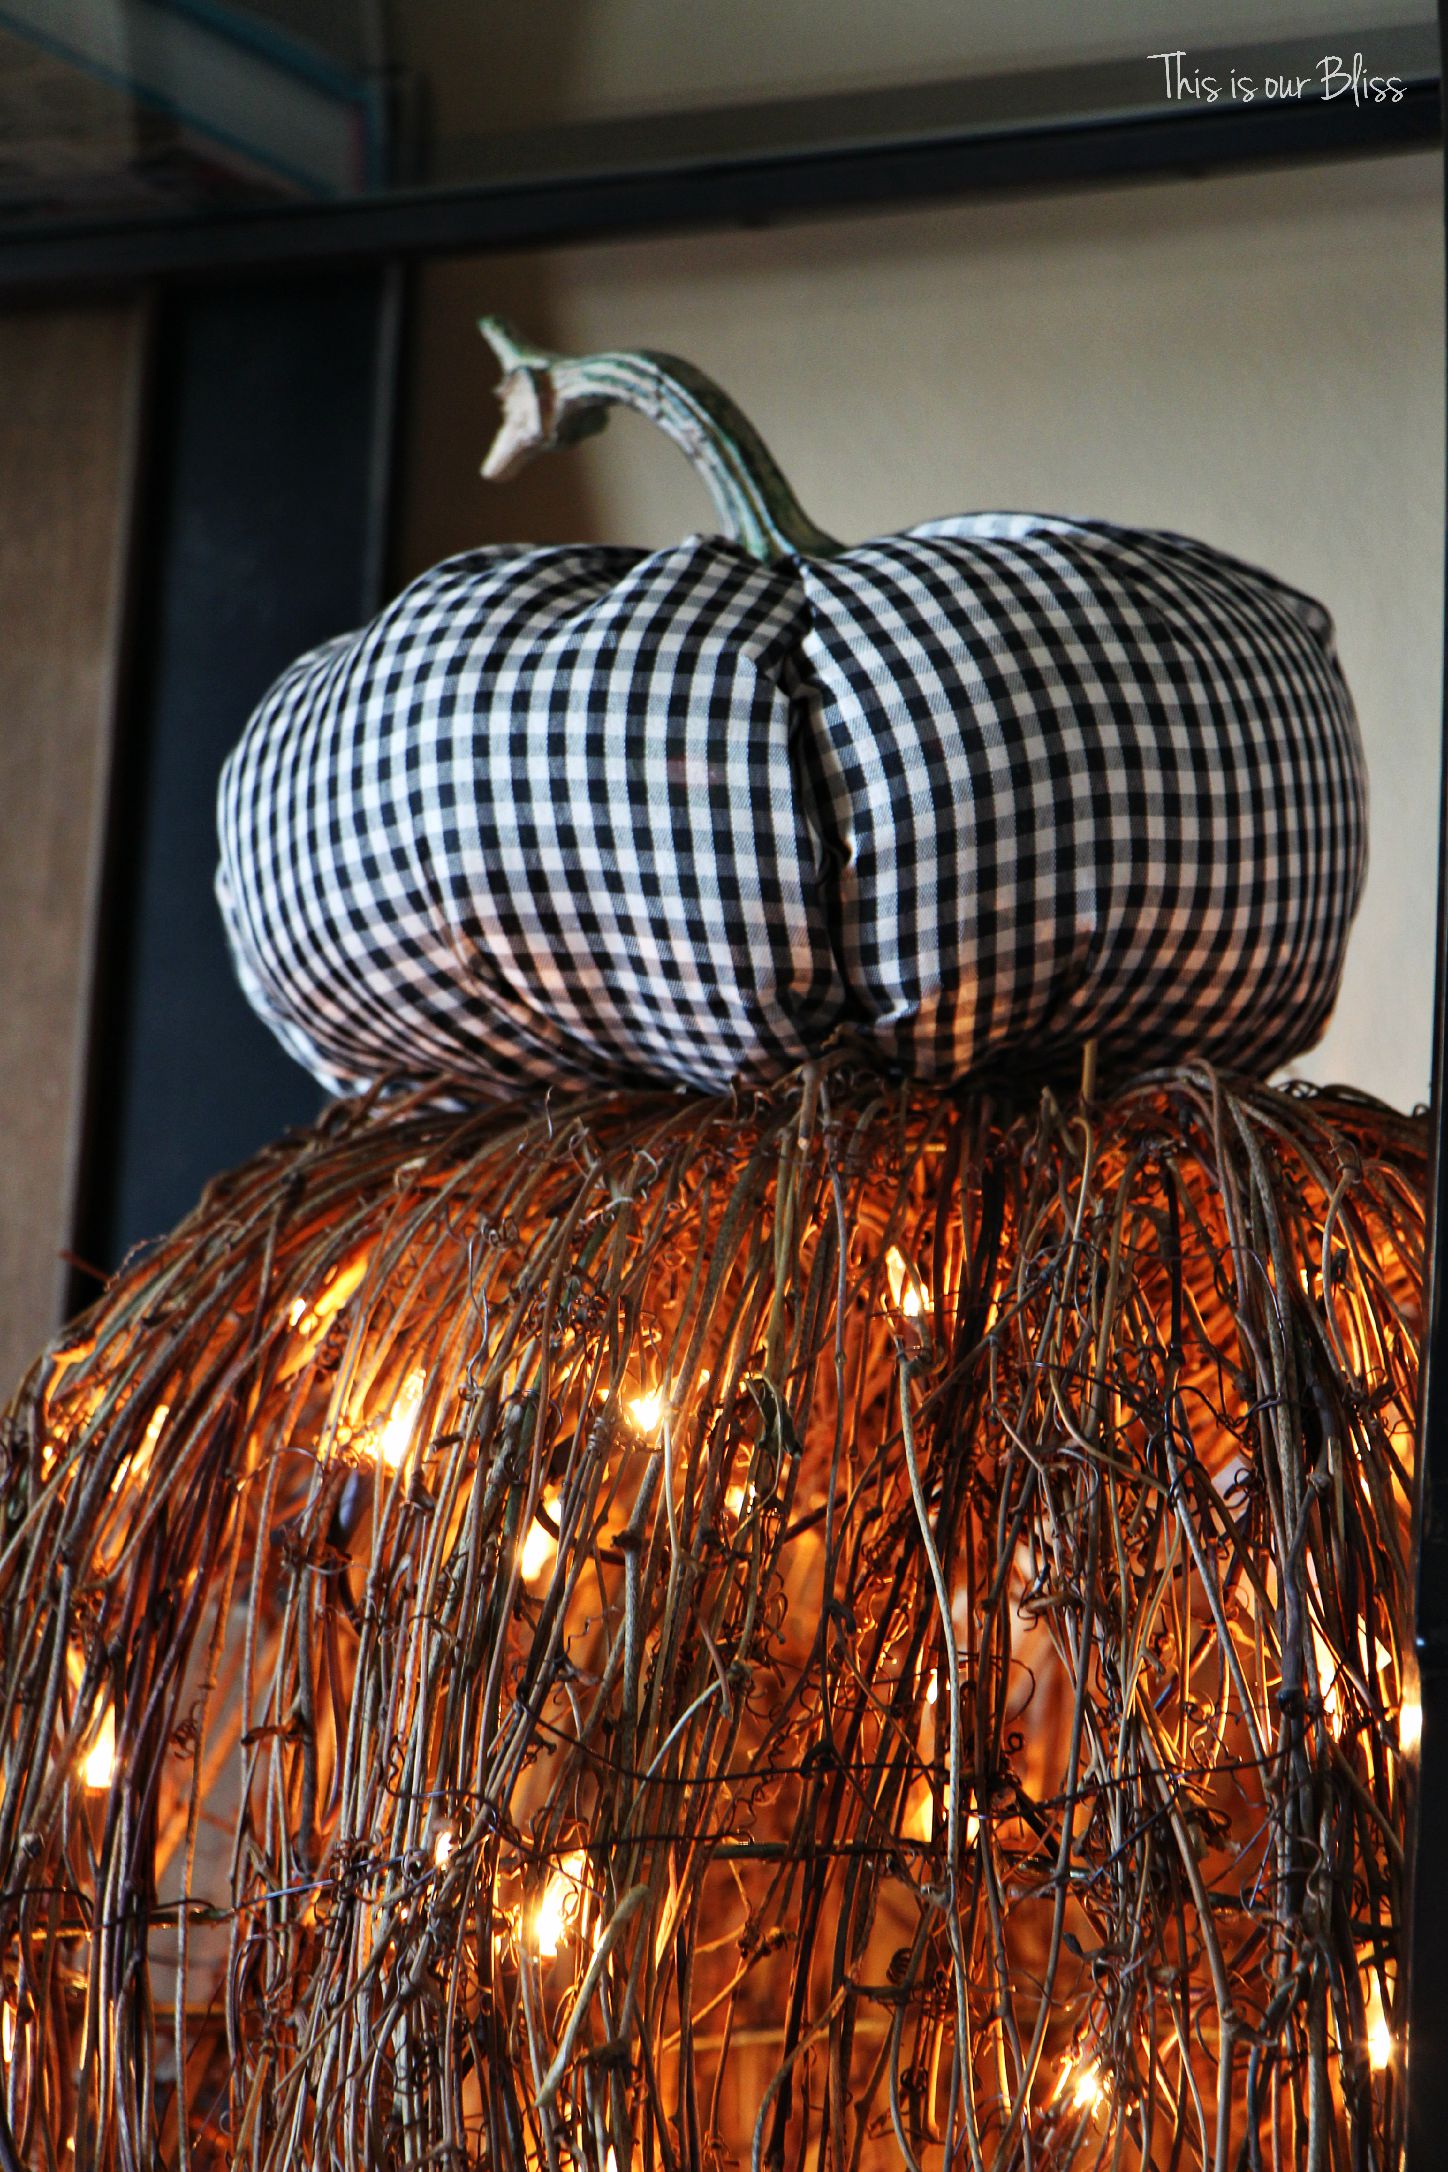 Fall entryway - fall vignette - metallic artichokes -gingham fabric pumpkin - fall decor - This is our Bliss